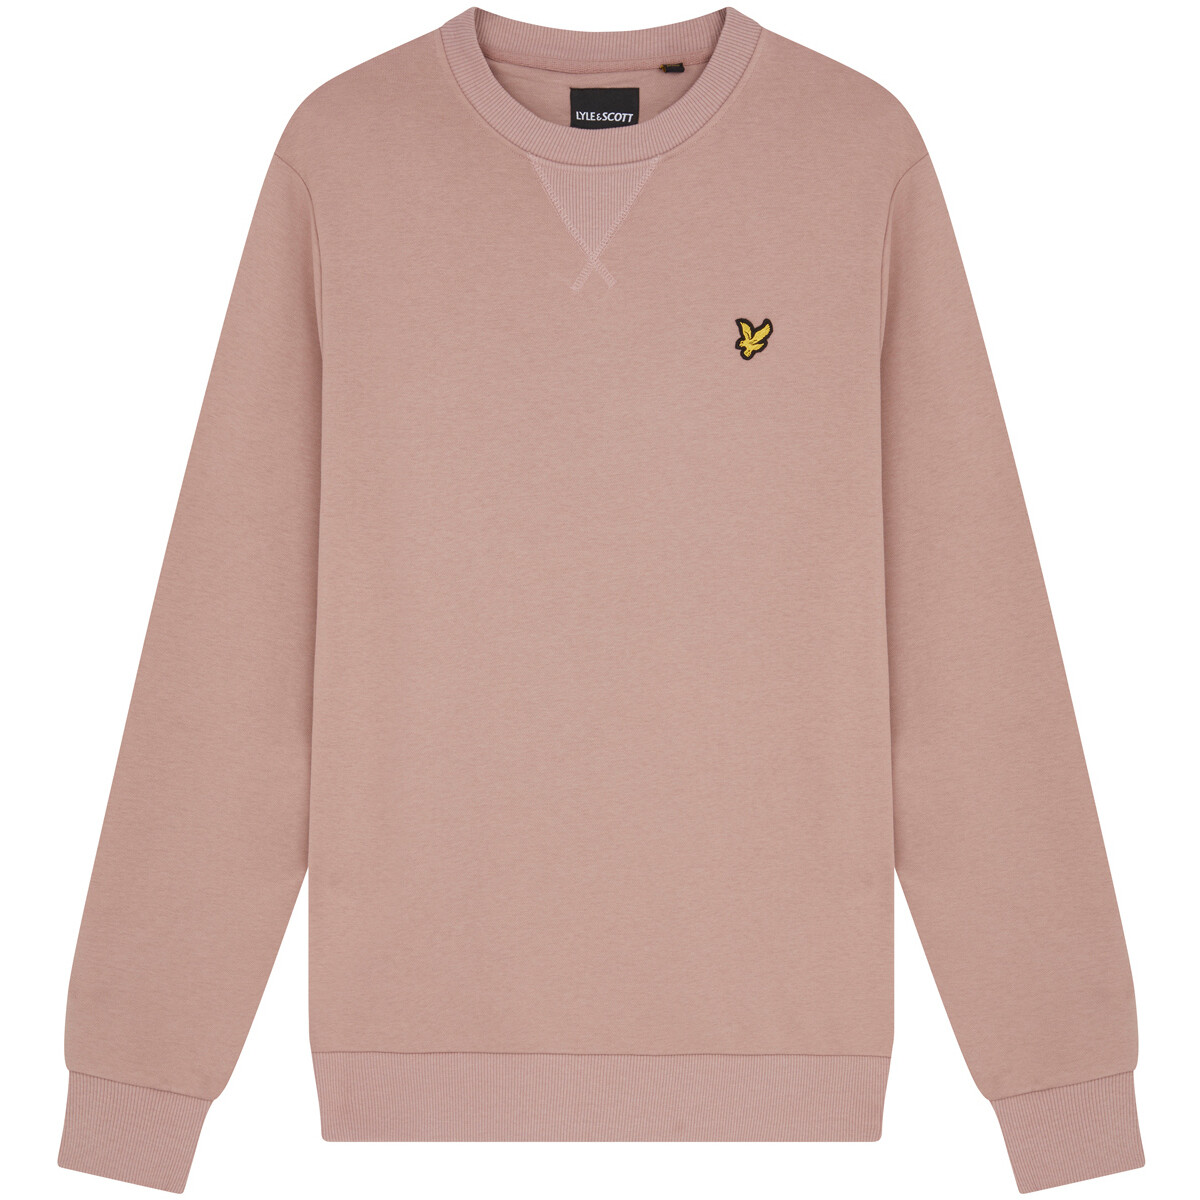 Textiel Heren Sweaters / Sweatshirts Lyle & Scott Sweatshirt col rond Roze